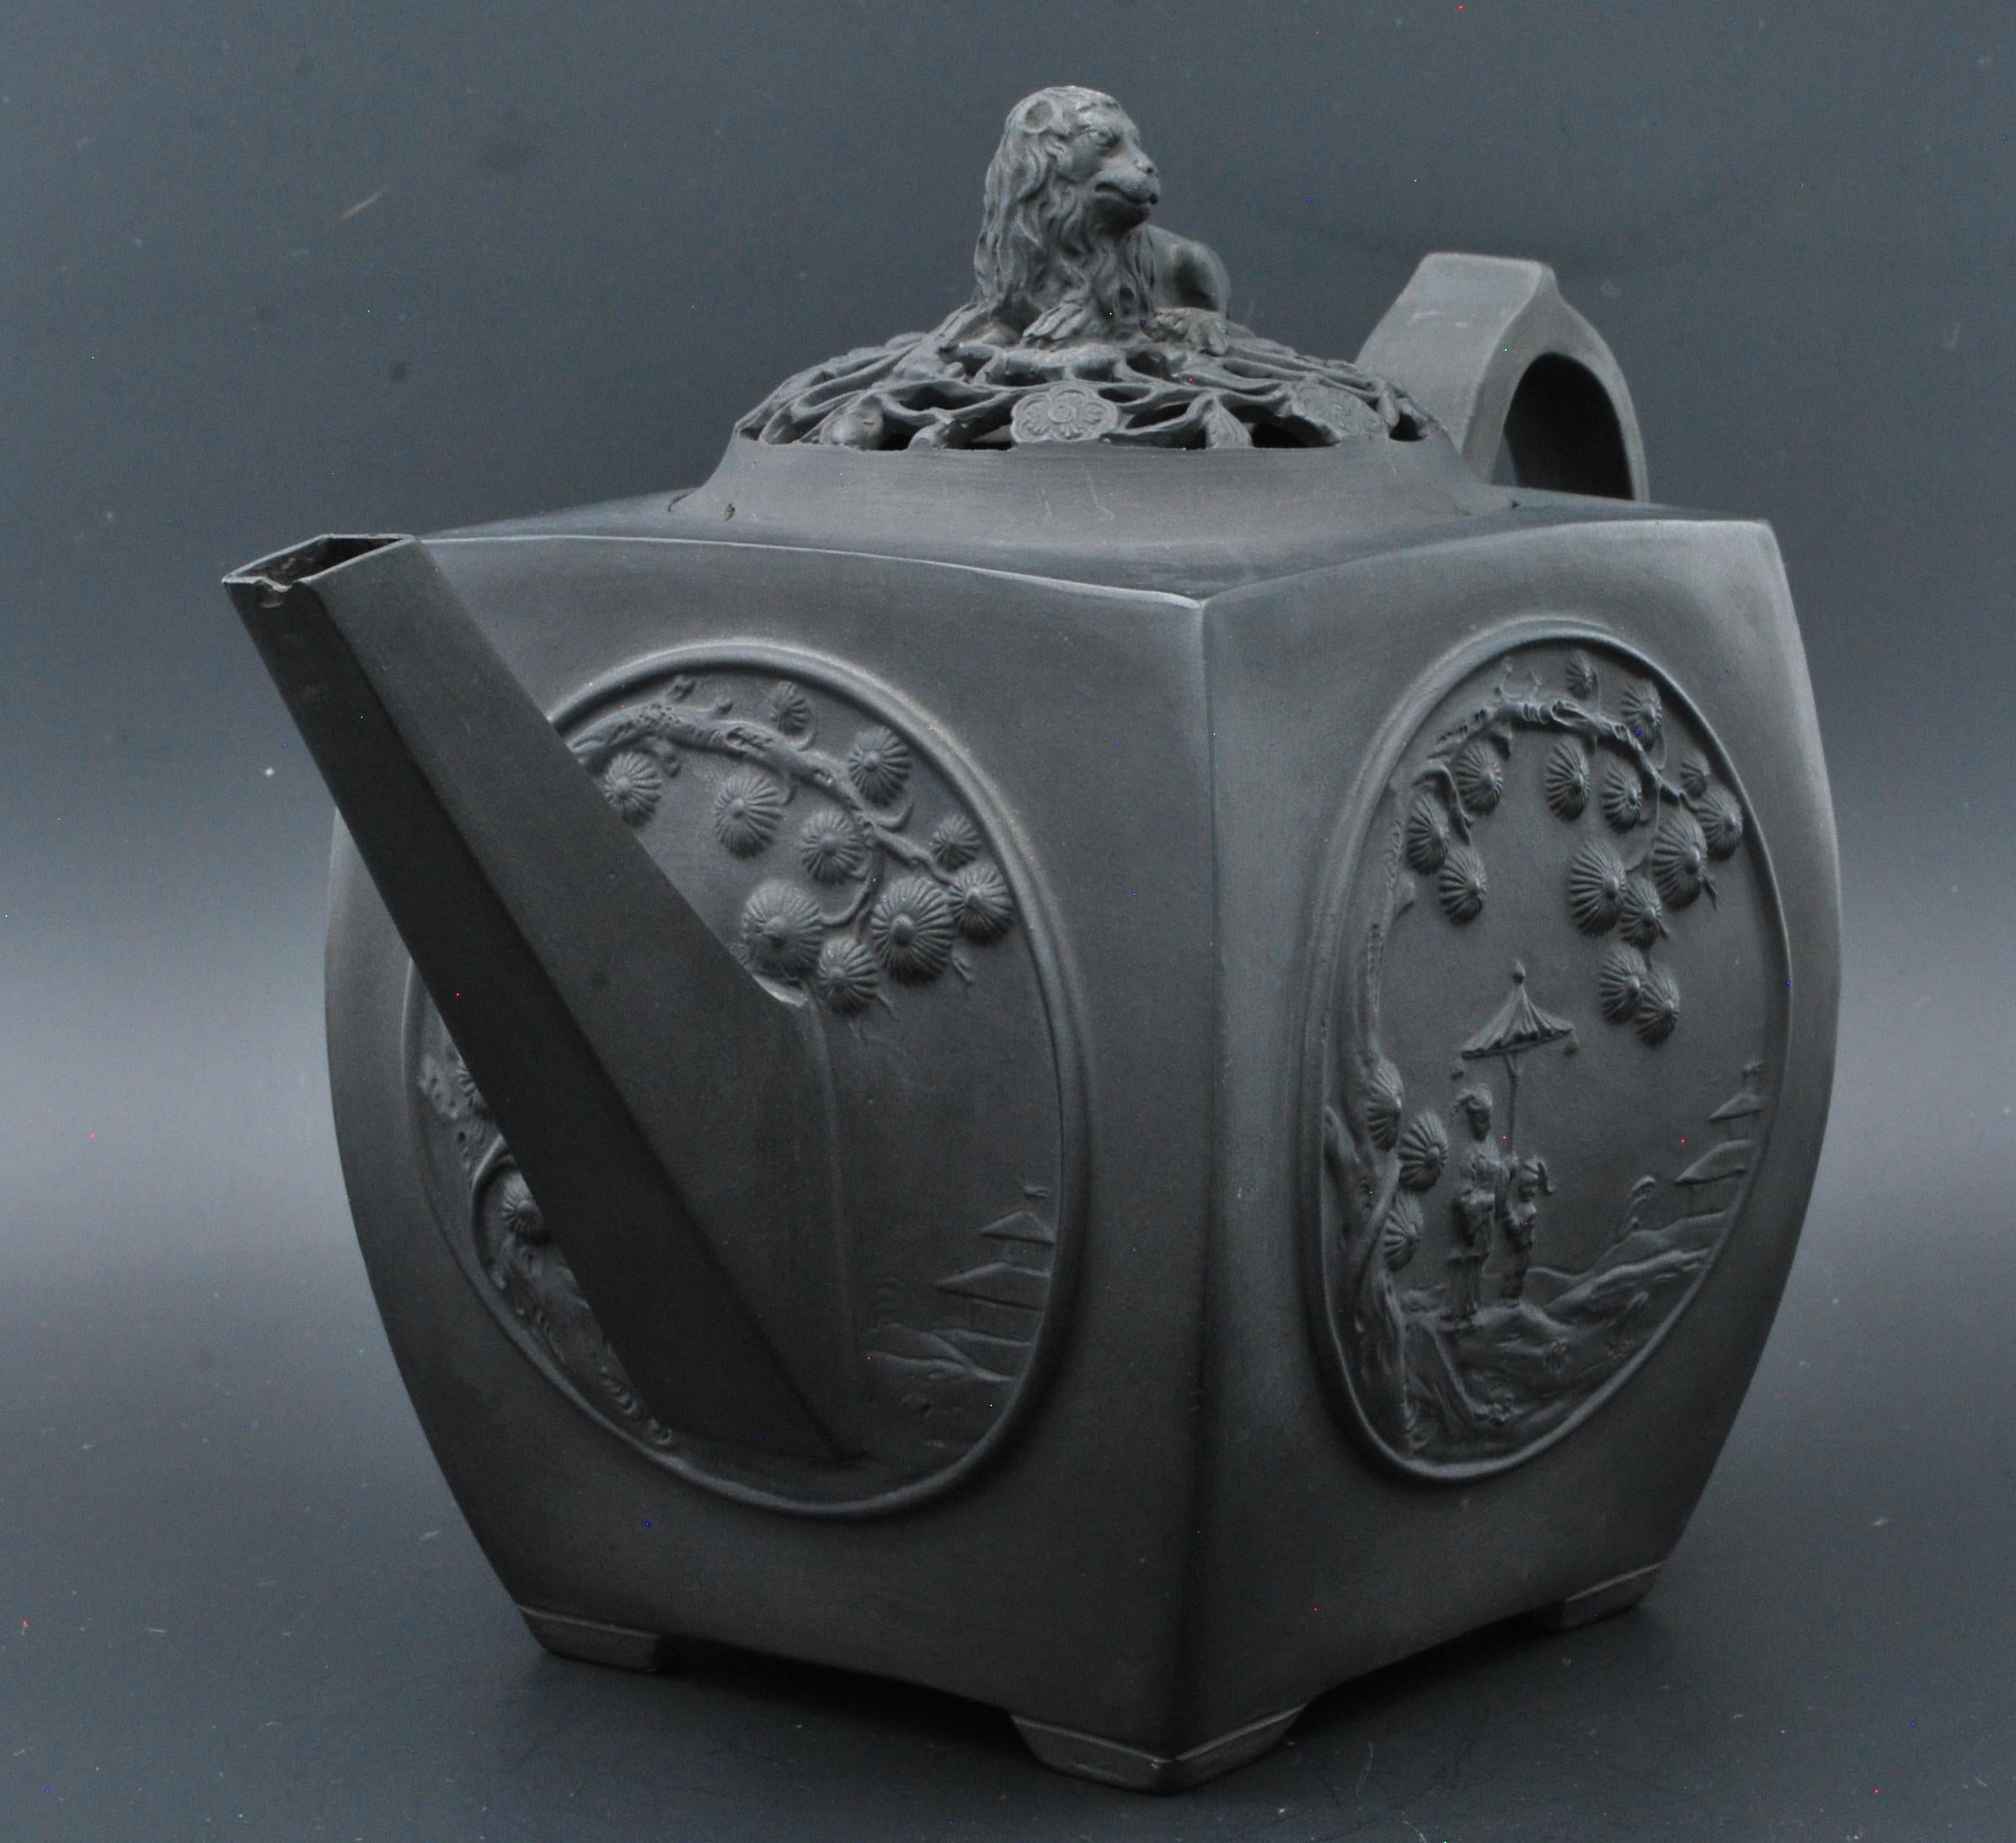 Chinoiserie Black Basalt Teapot with Pierced Lid, Turner, C1790